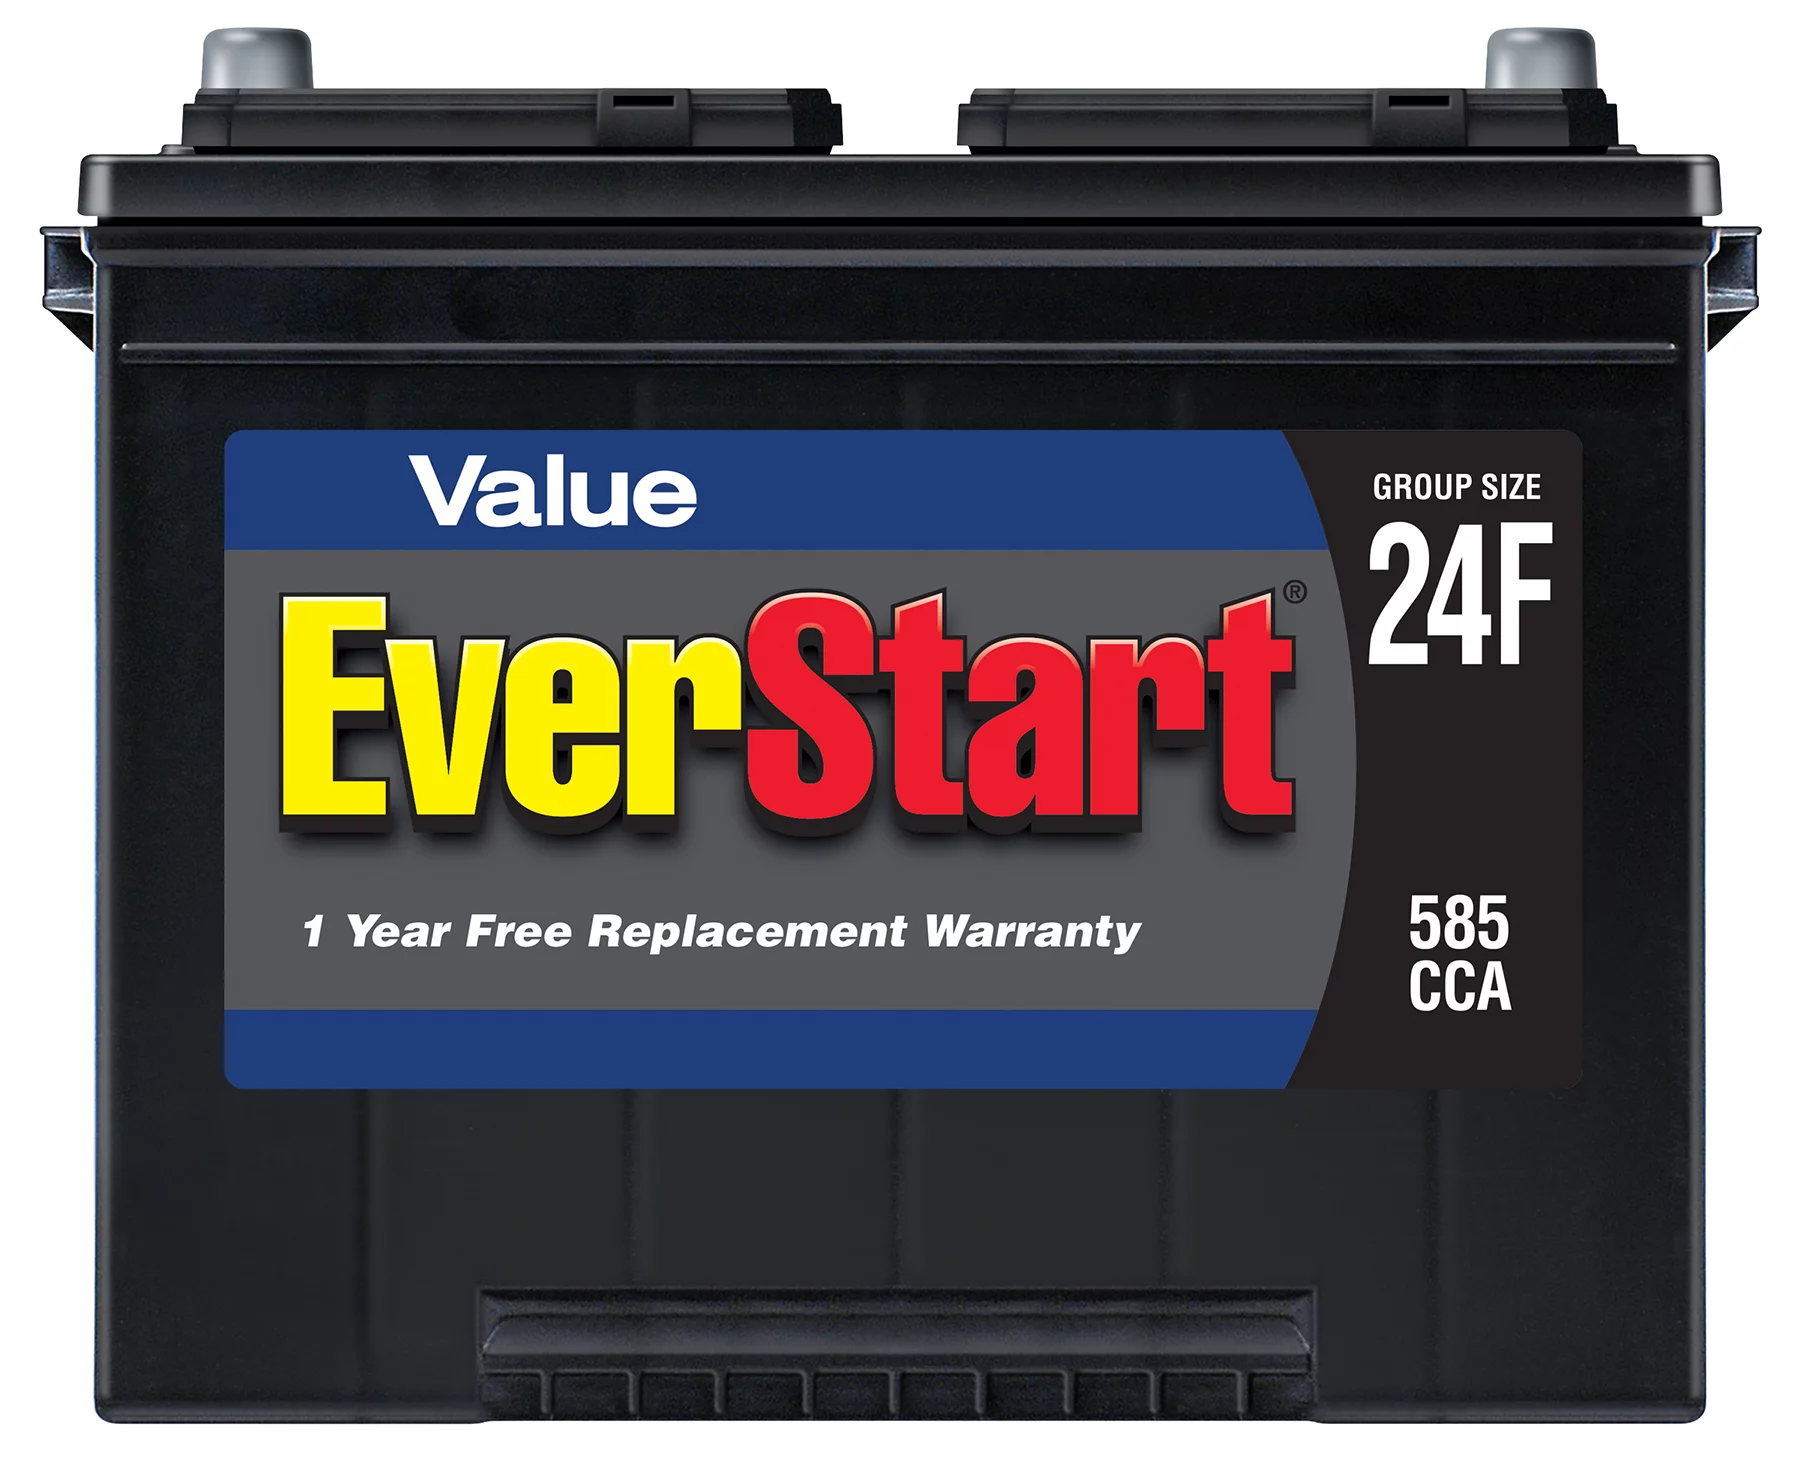 EverStart Value Lead Acid Automotive Battery, Group Size 24F (12 Volt/585 CCA)